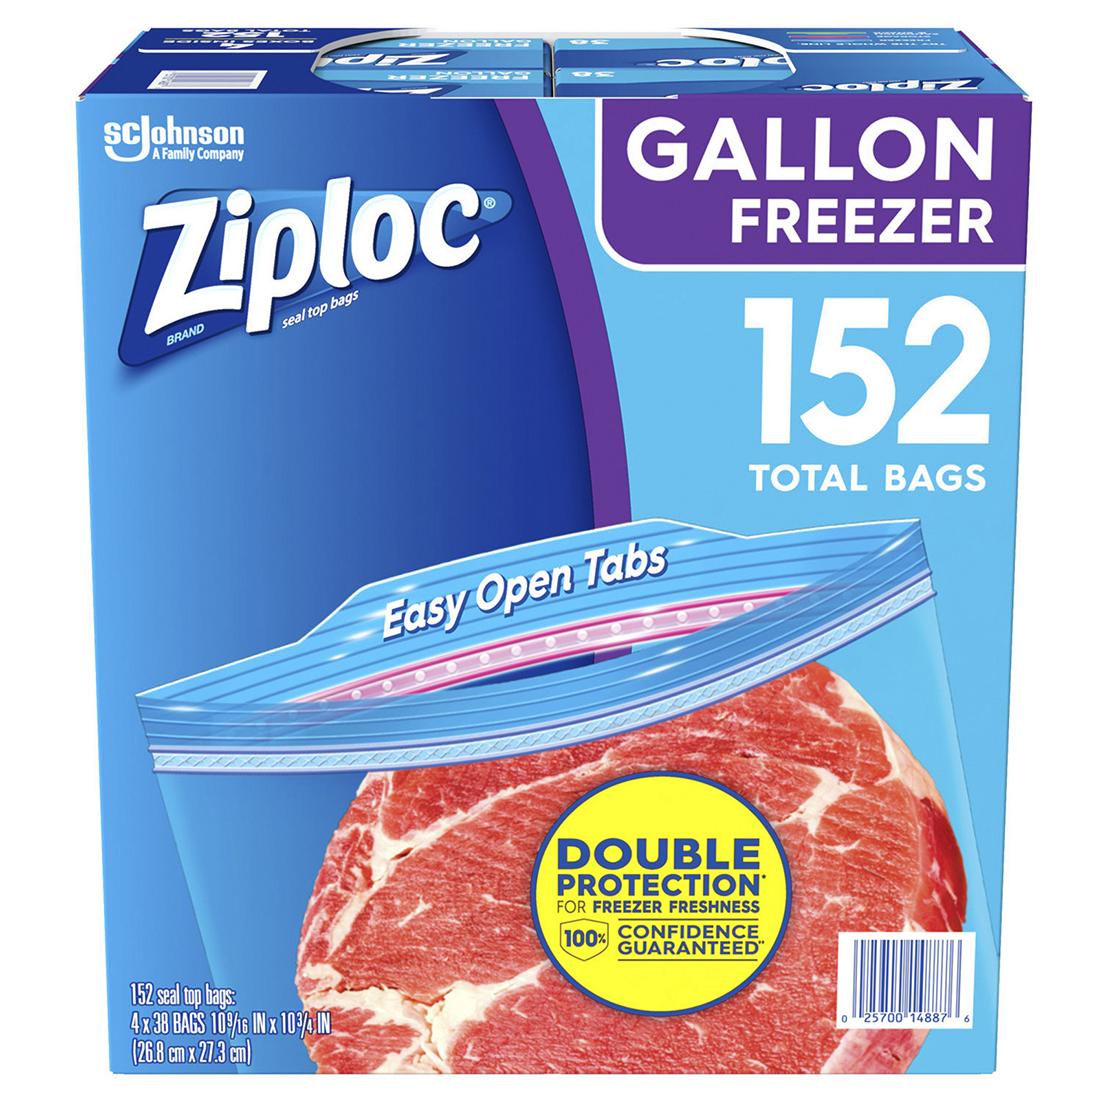 Ziploc Gallon Freezer 4 pack - 152 bags